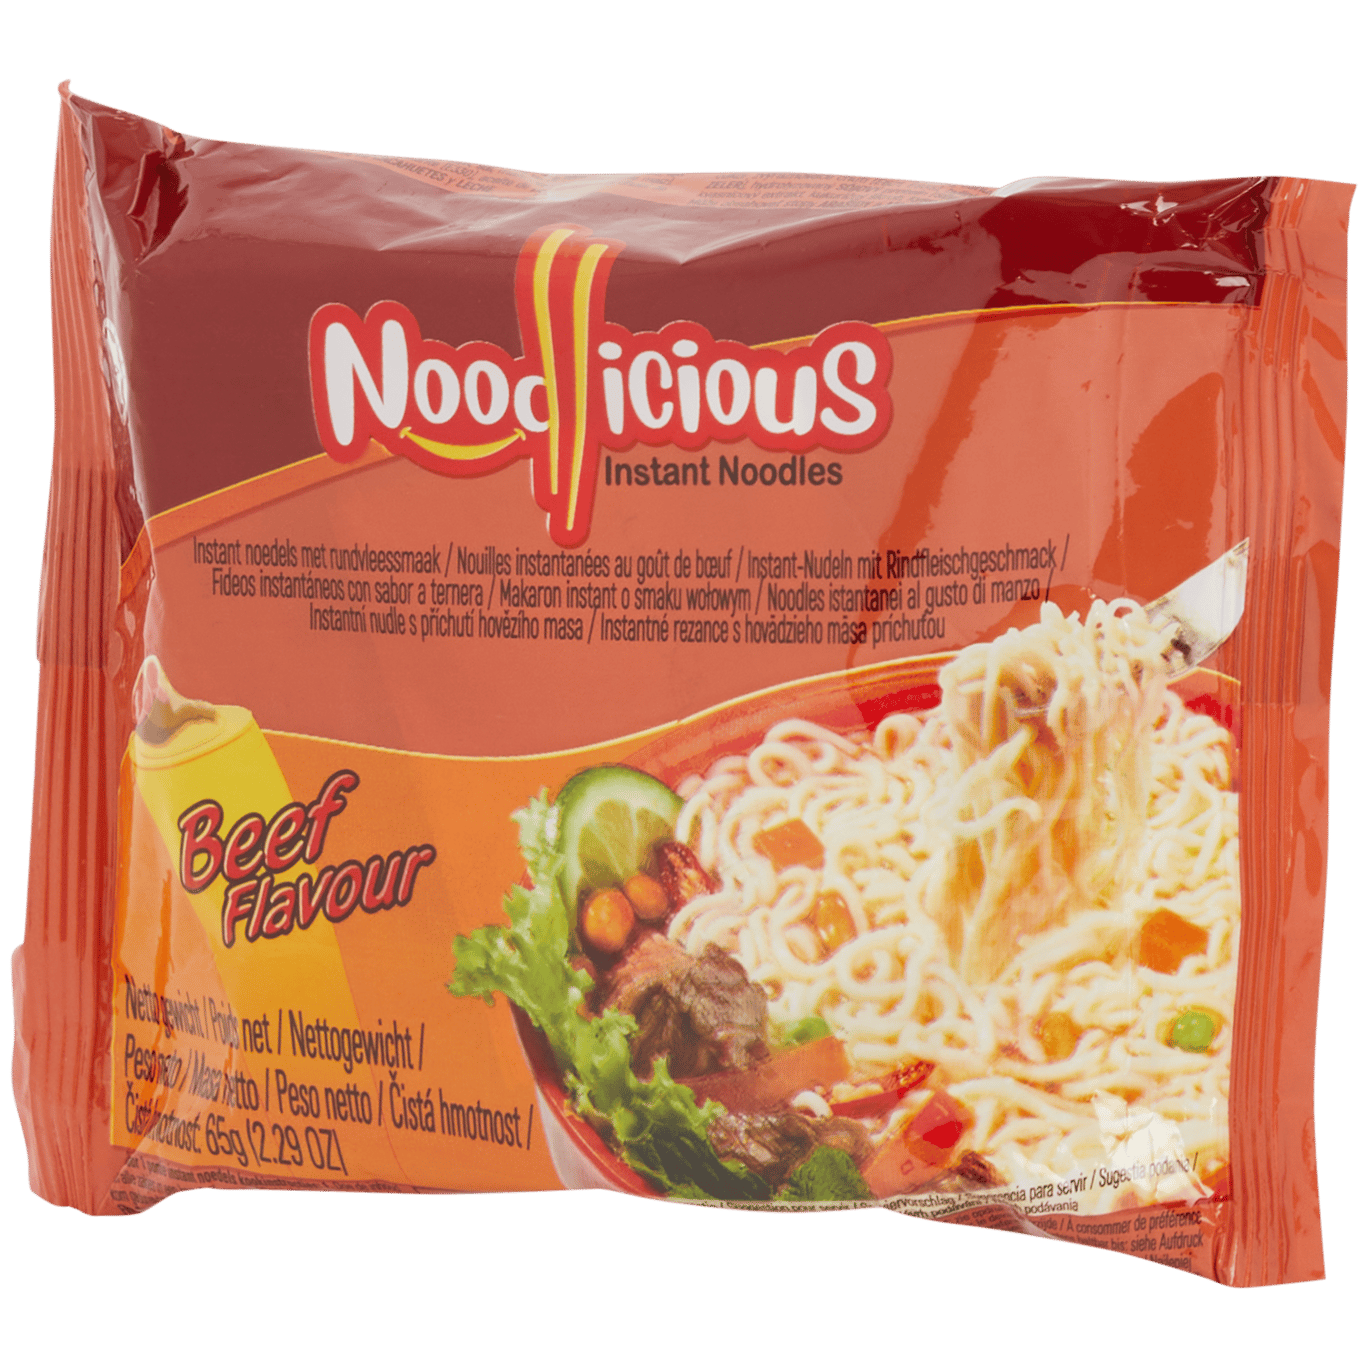 Noodlicious instant noedels